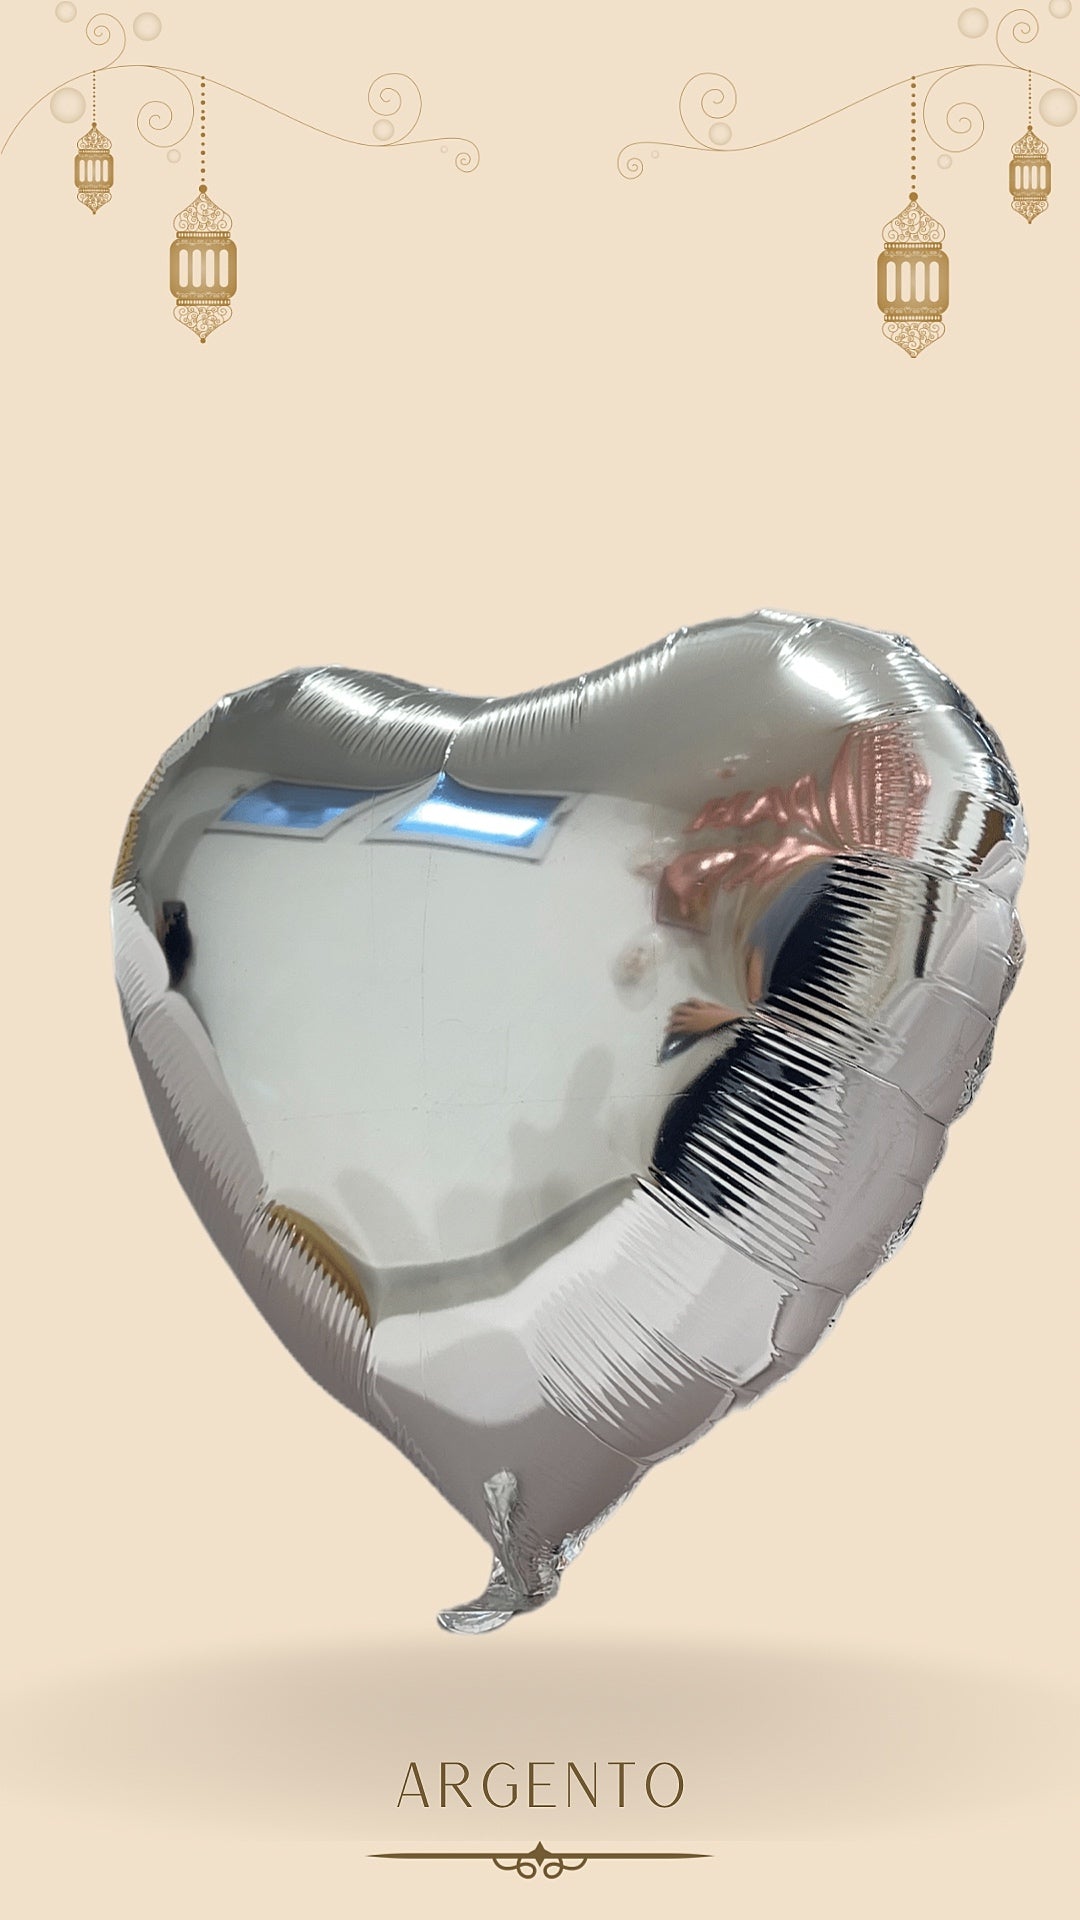 MAXI Heart balloon